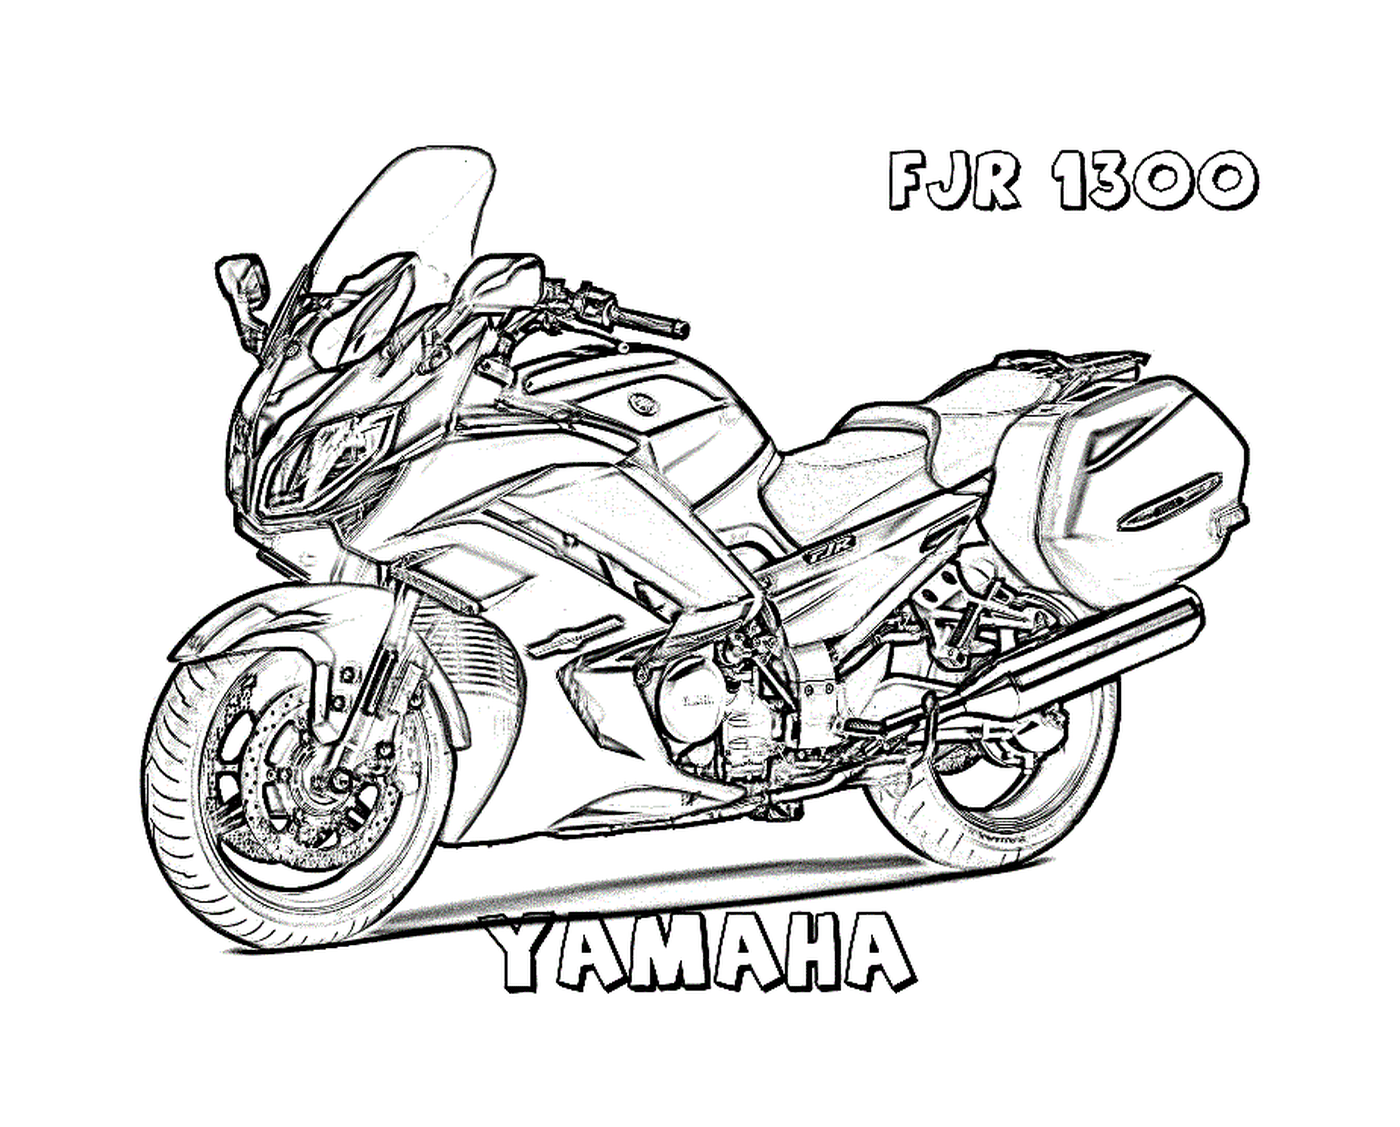   Moto Yamaha de course 